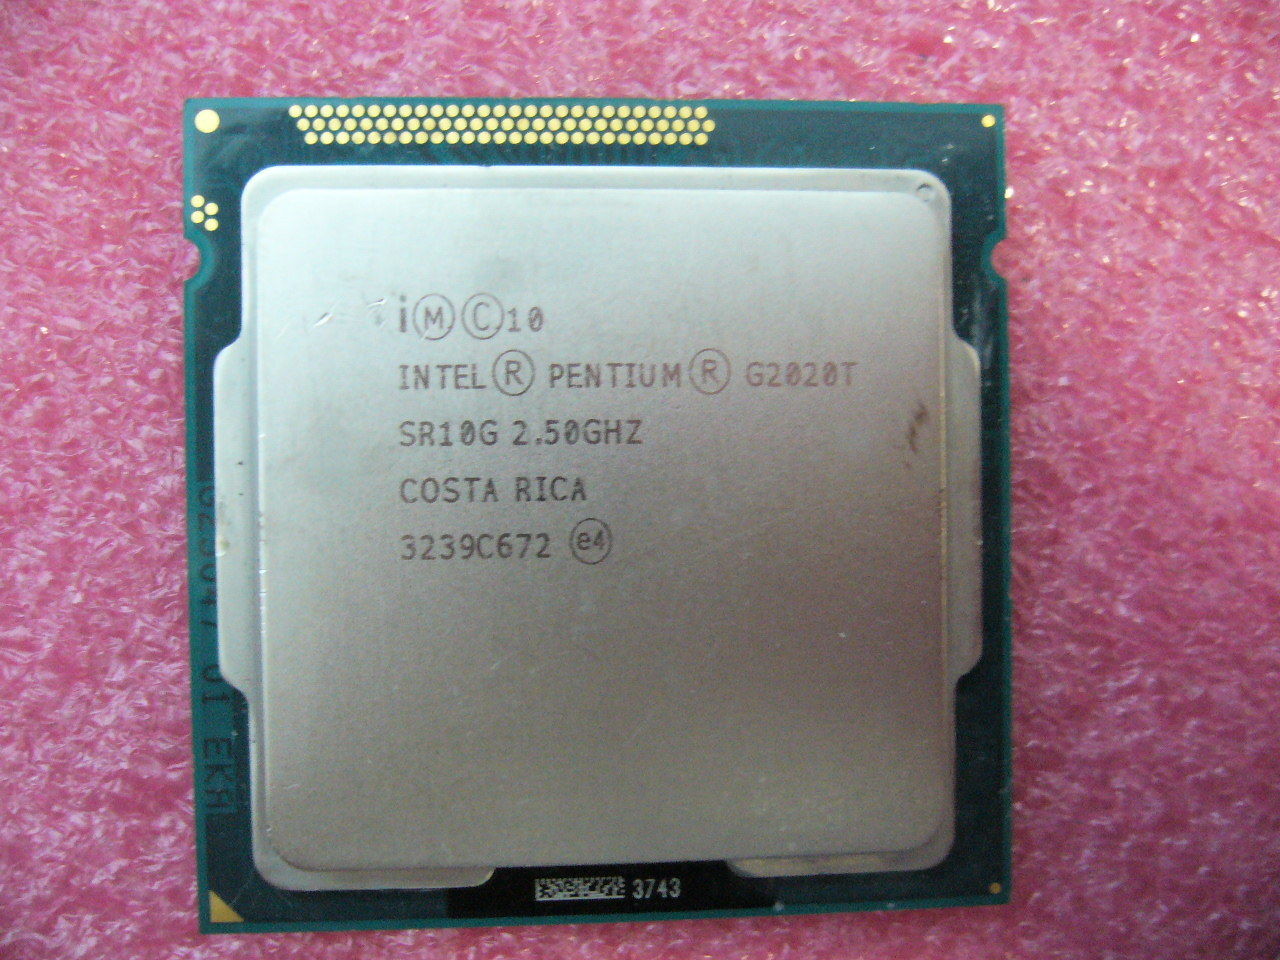 QTY 1x INTEL Pentium CPU G2020T 2.5GHZ/3MB LGA1155 SR10G TDP 35W - Click Image to Close